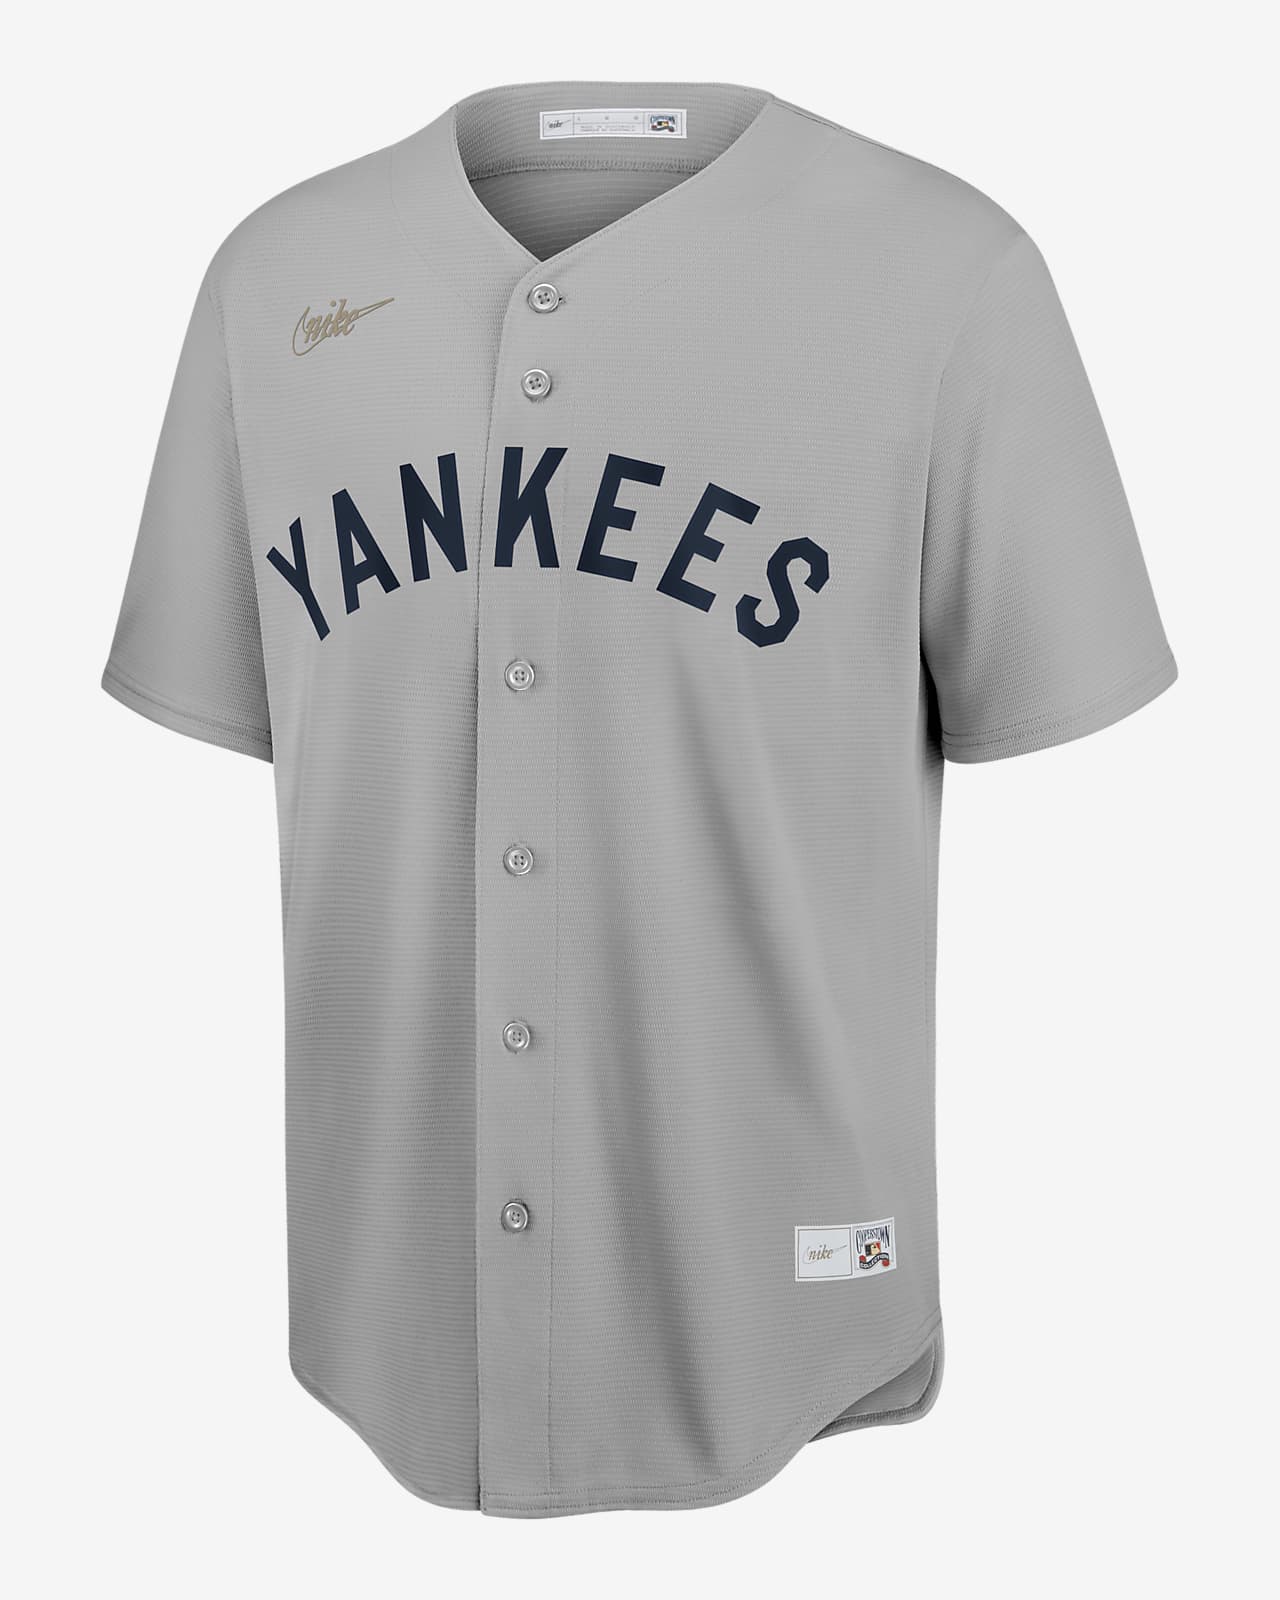 Camiseta de béisbol Cooperstown para hombre MLB New York Yankees